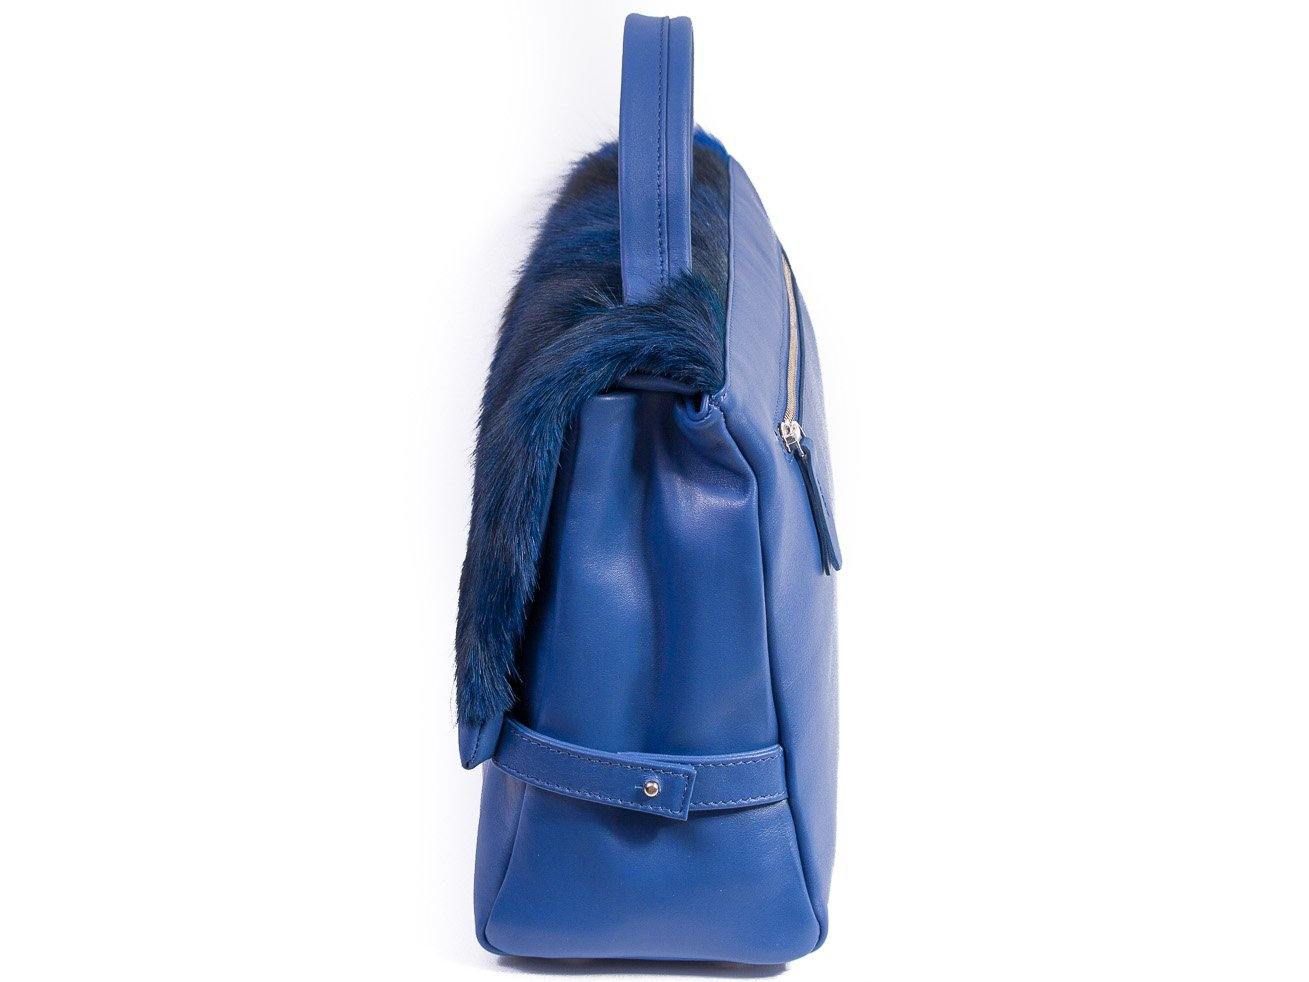 sherene melinda springbok hair-on-hide royal blue leather smith tote bag Stripe side